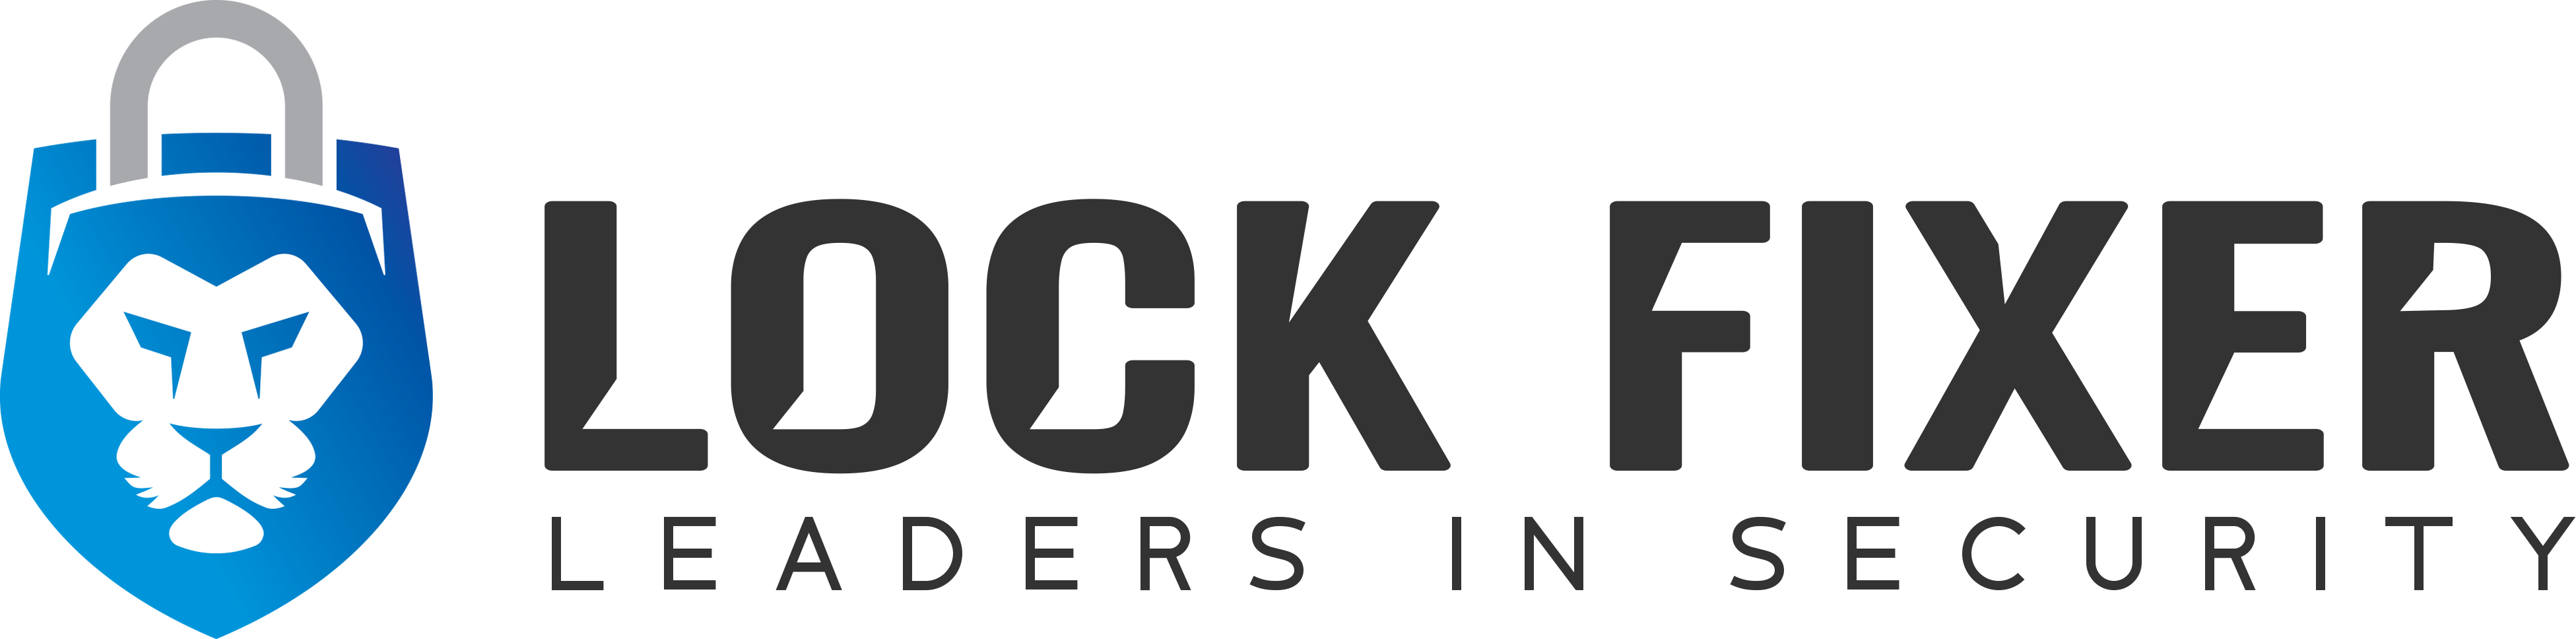 Locksmith-Near-Me-Las-Vegas-Lock-Fixer-Logo-Dark